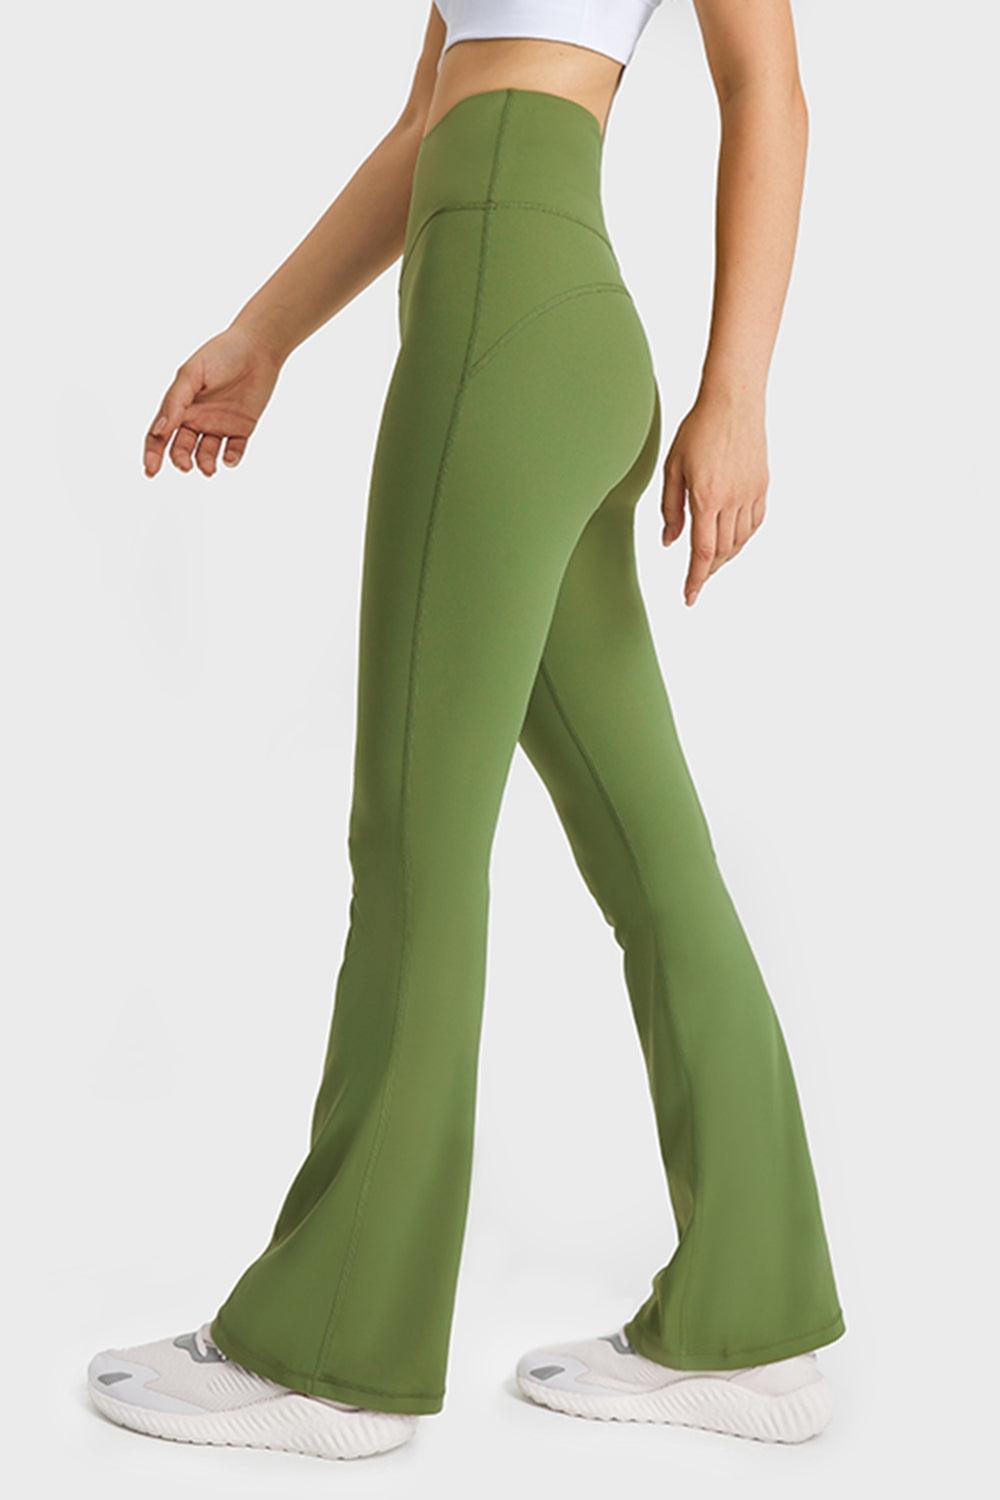 Snug Comfort Flare Yoga Pants - MXSTUDIO.COM